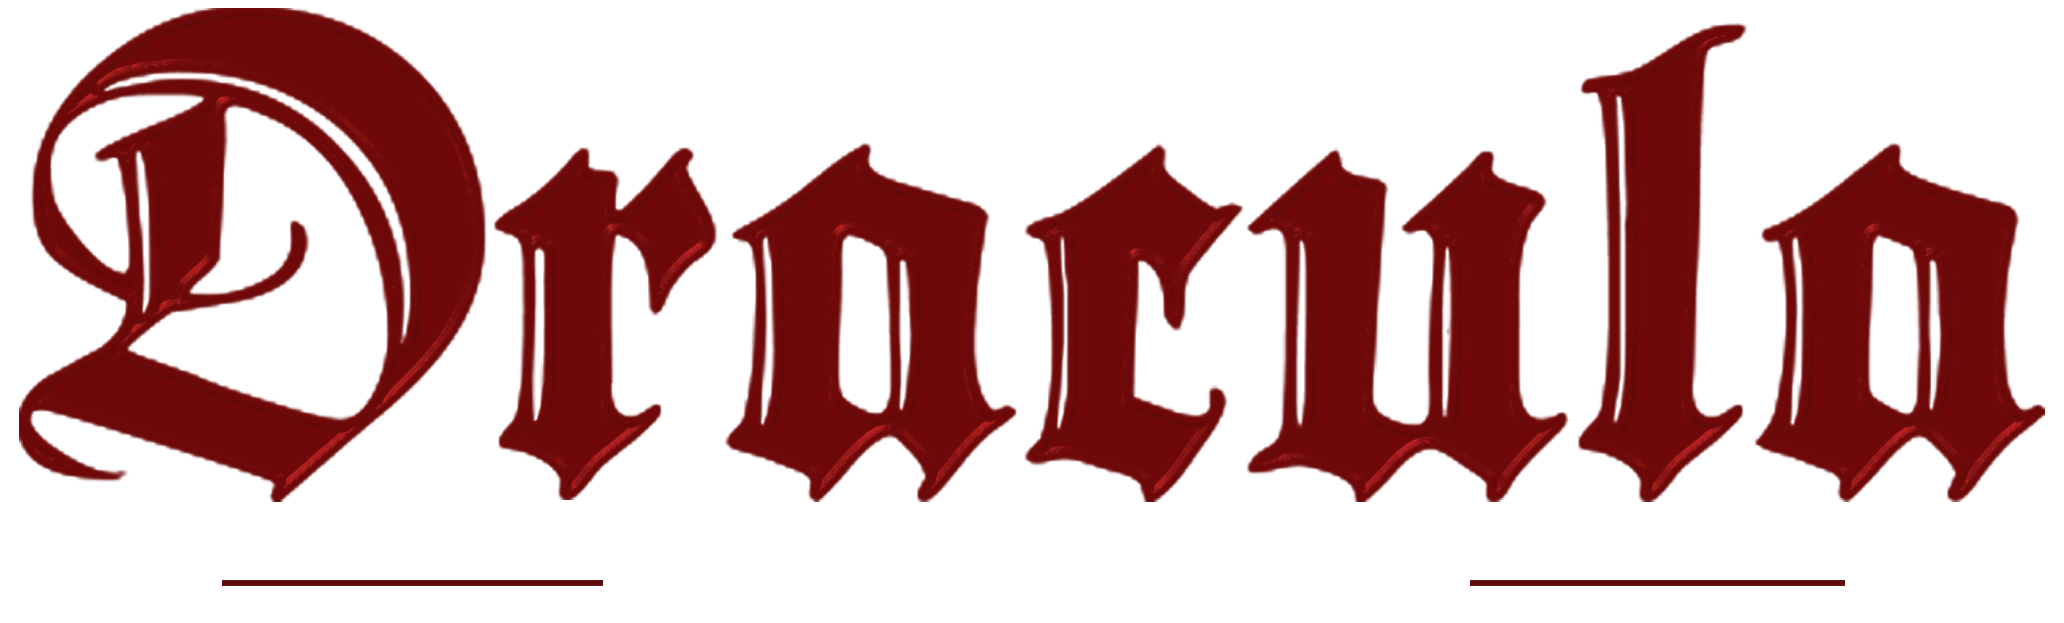 Dracula Logo - Dracula Begins by techgnotic on DeviantArt